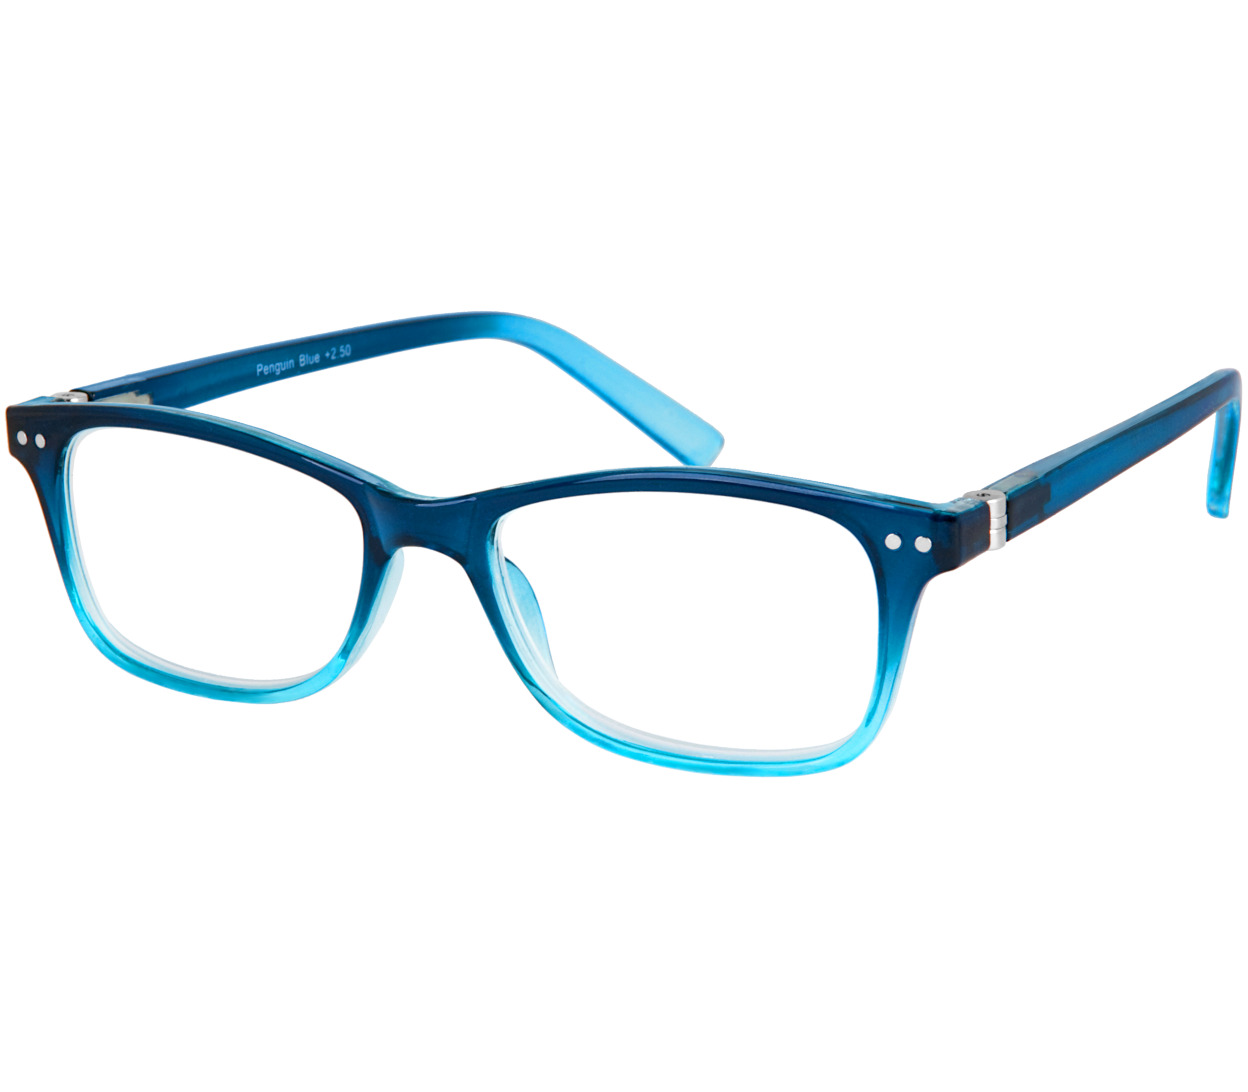 Main Image (Angle) - Penguin (Blue) Reading Glasses